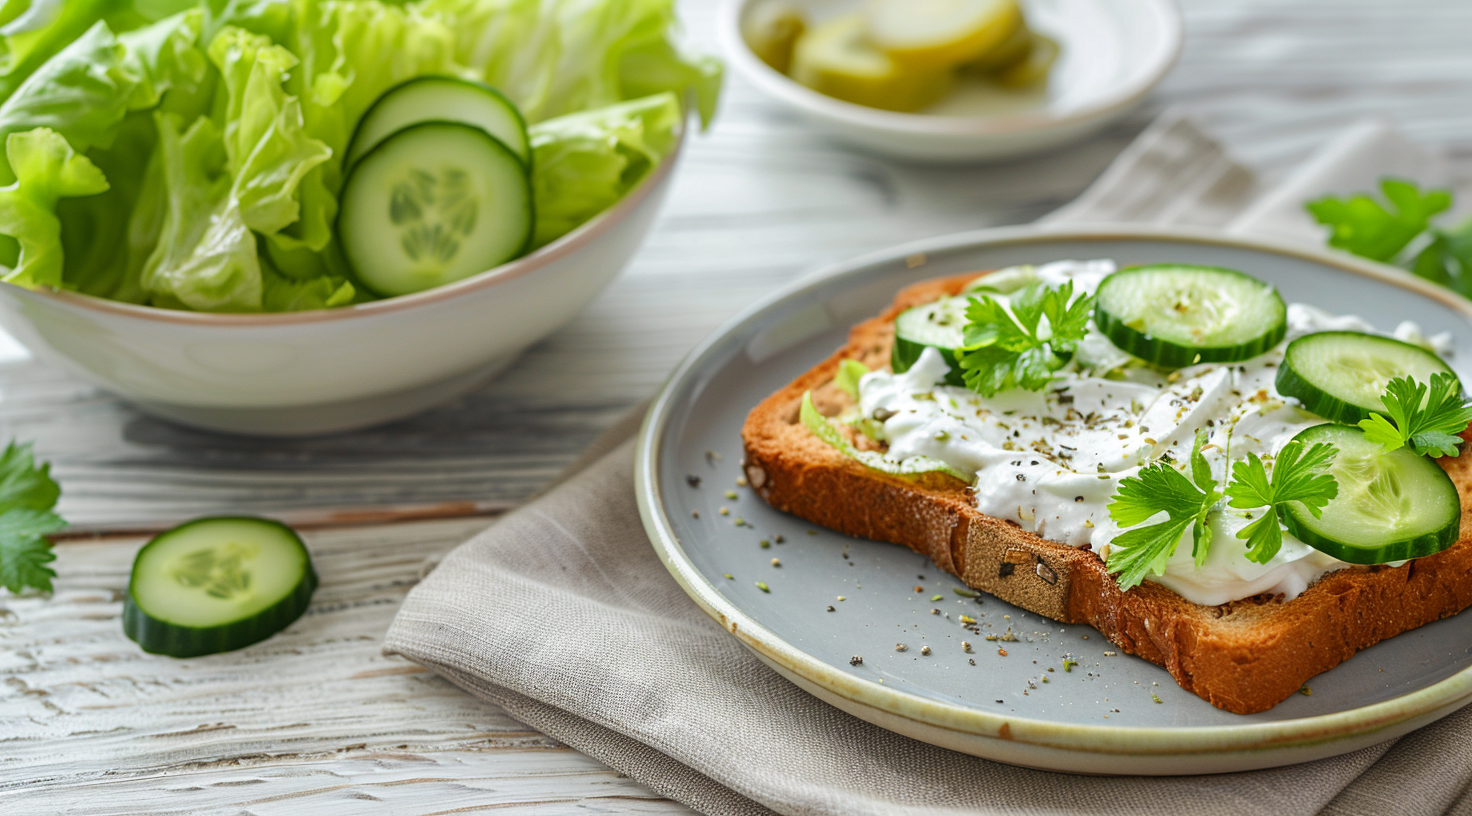 healthy breakfast meal having bran bread and cucumber - improve metabolism